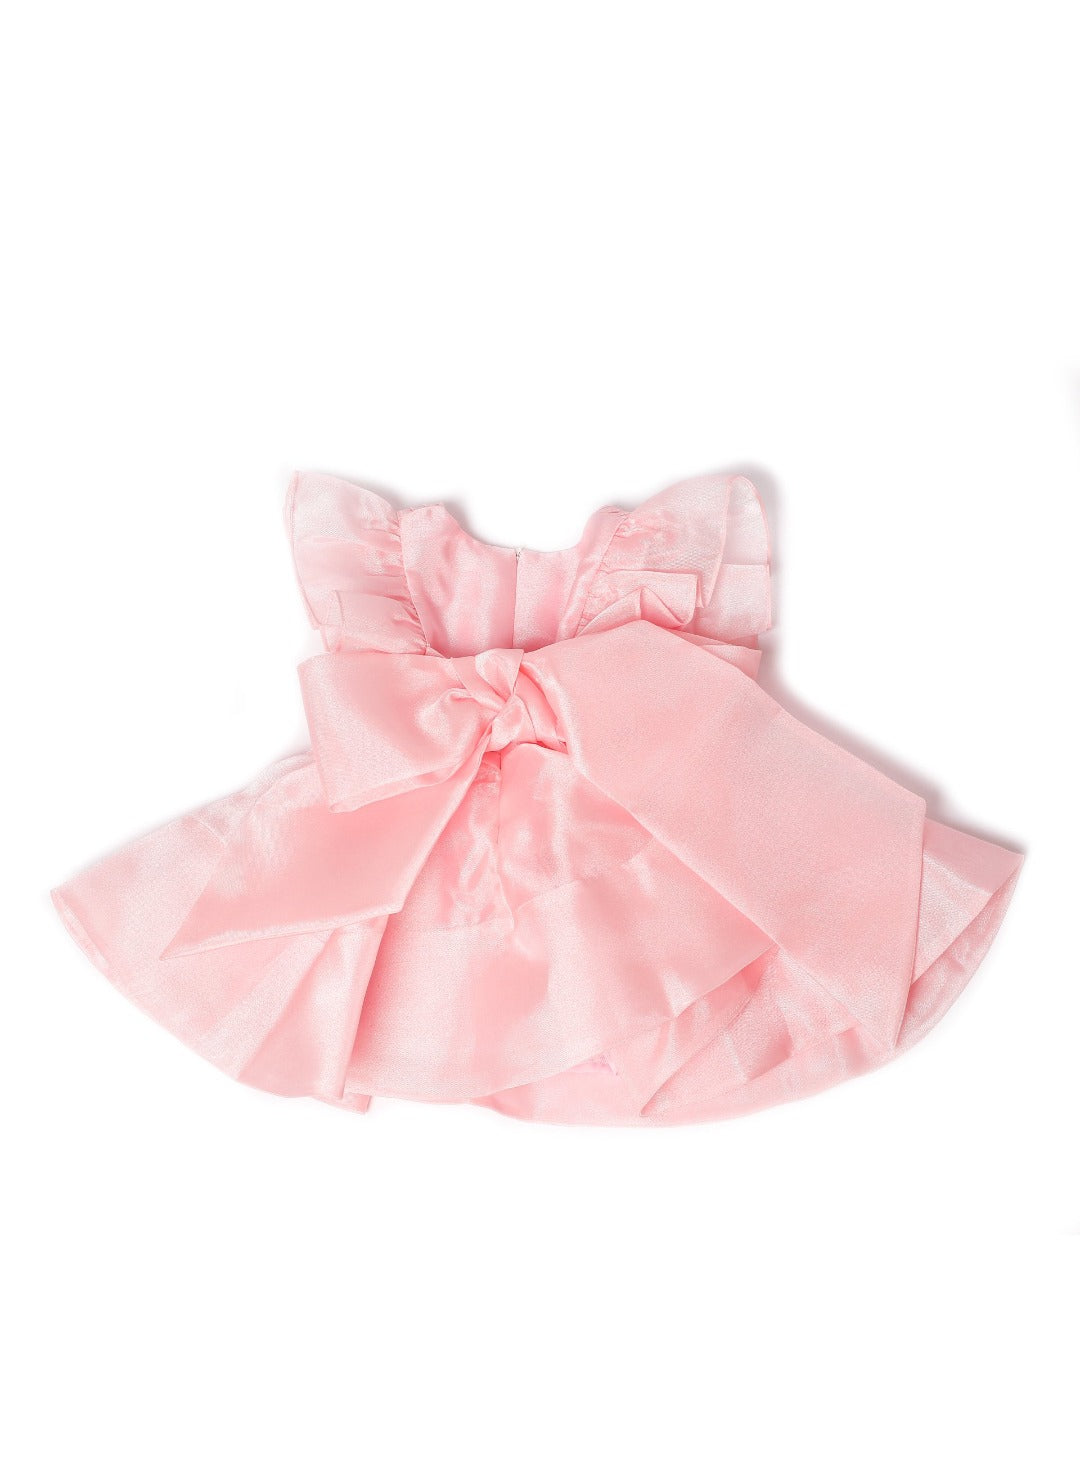 blush pink fairy dress